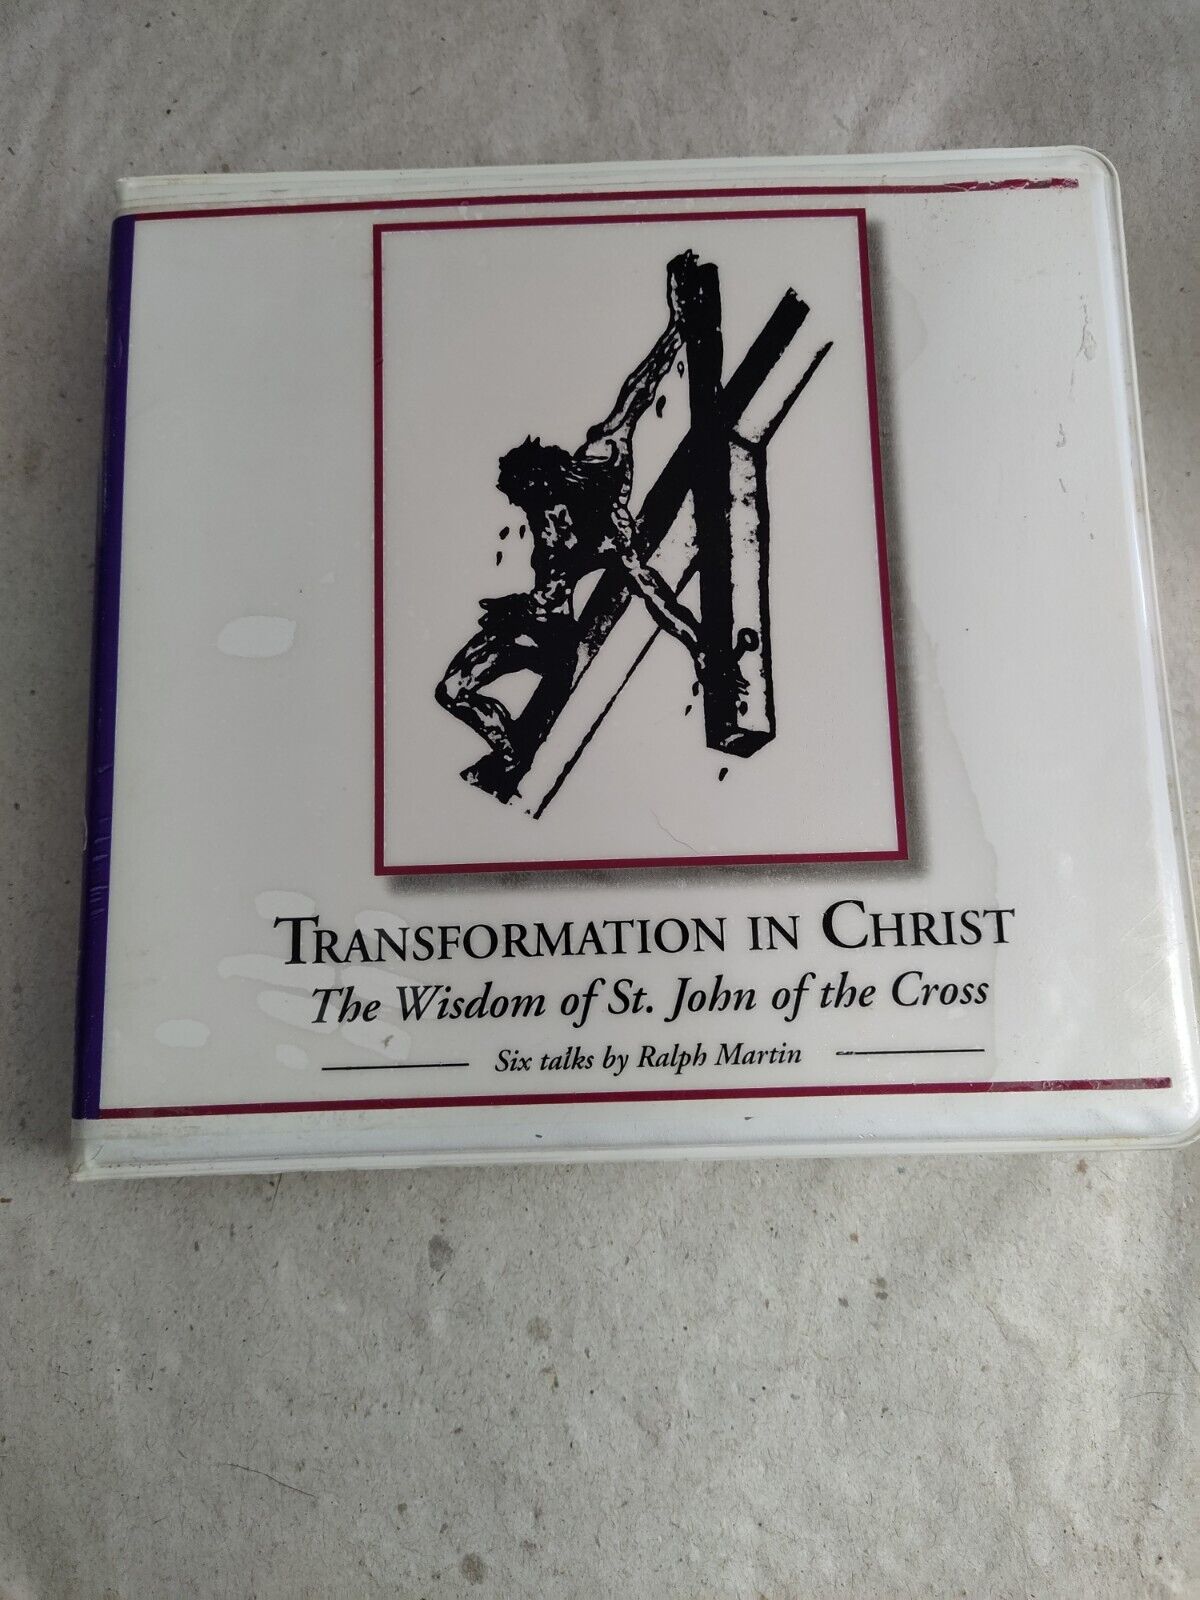 Transformation In Christ: The Wisdom Of St. John Of The Cross  6 Talks R. Martin